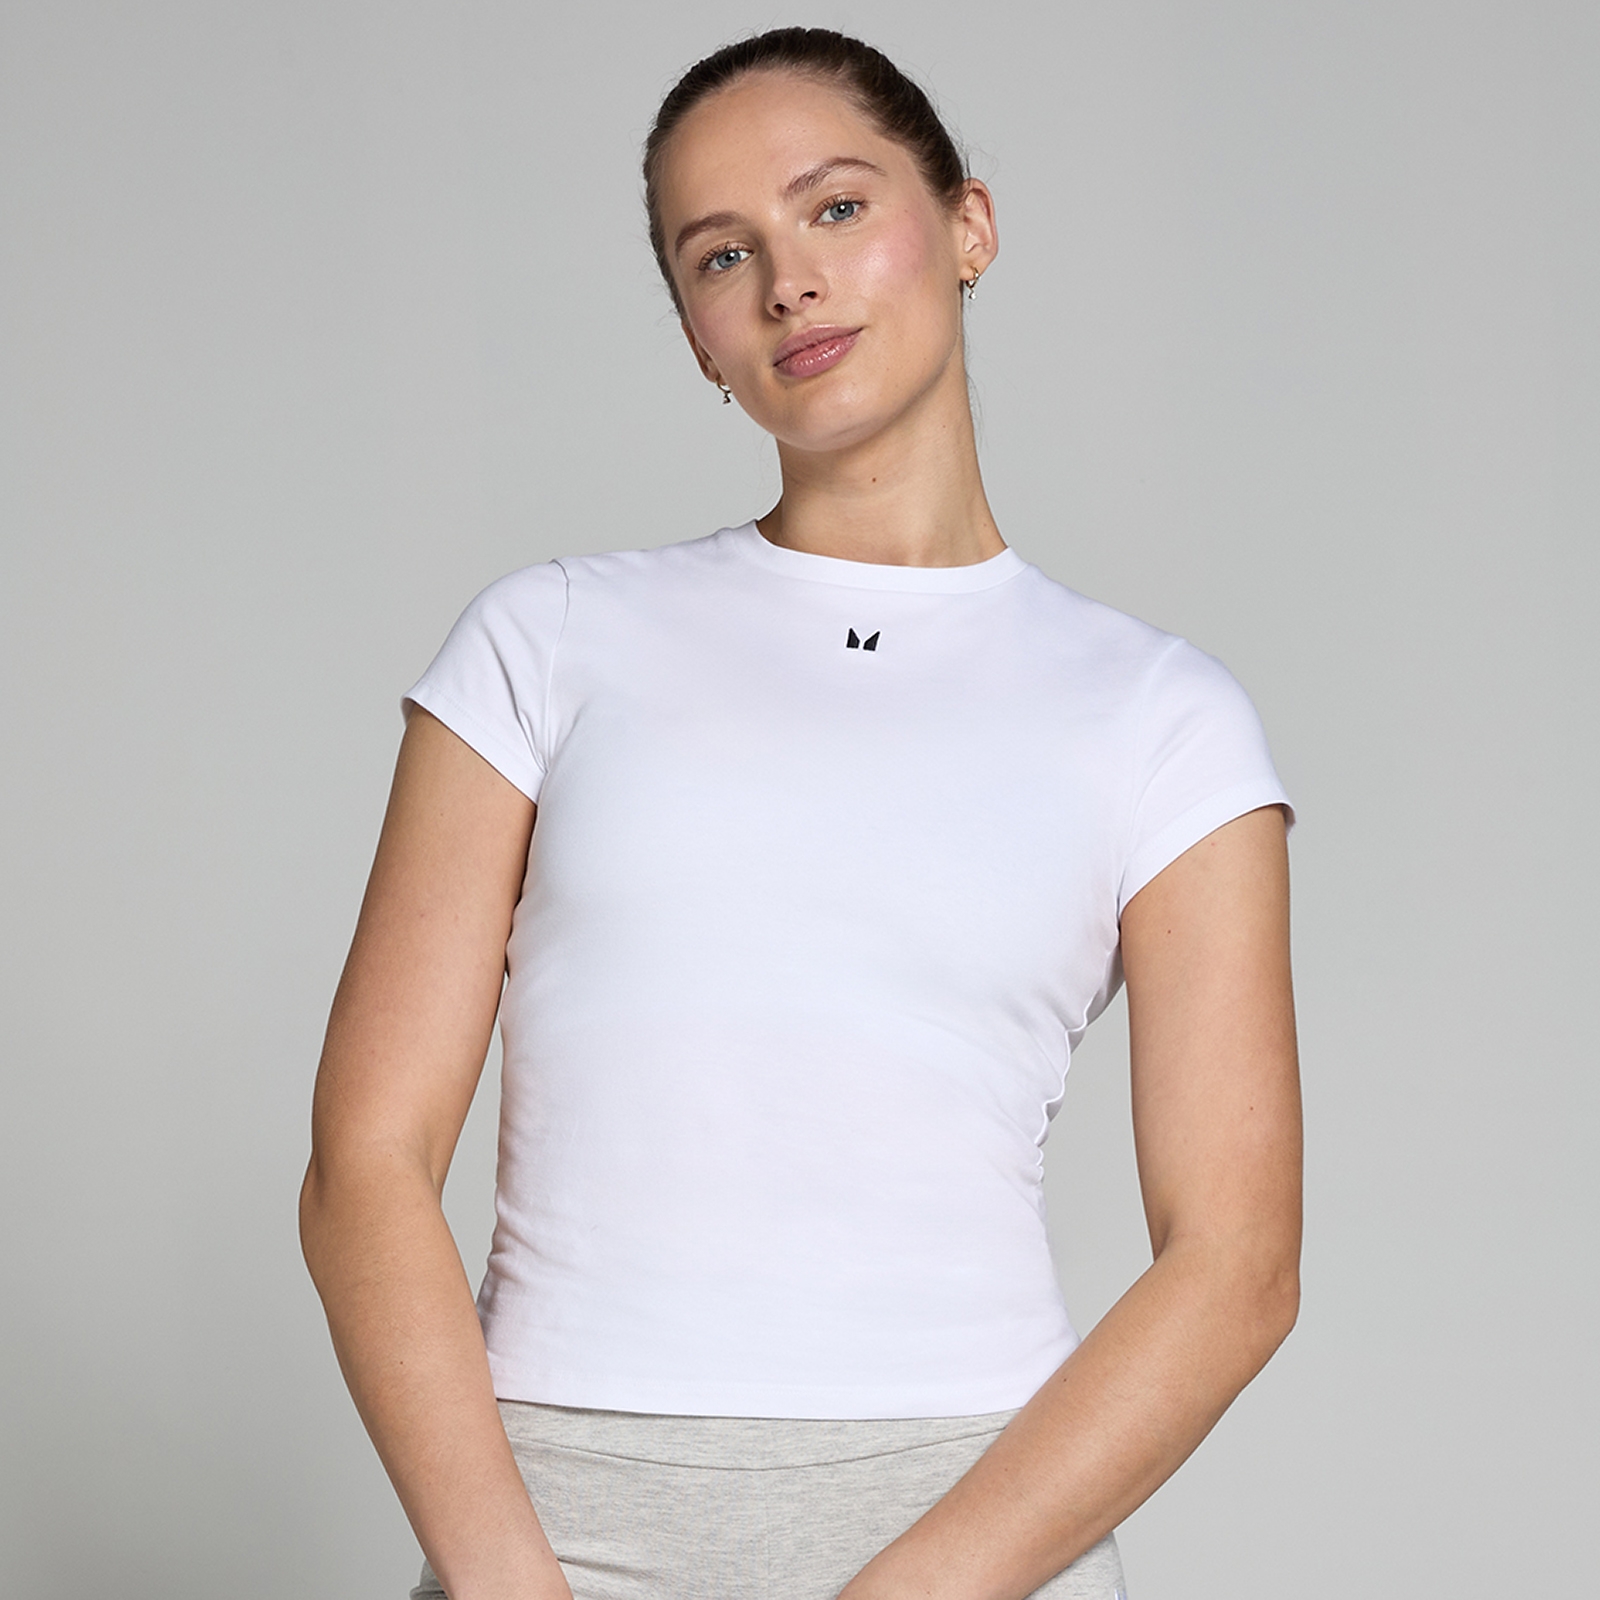 MP Women's Basic Body Fit Short Sleeve T-Shirt - White - L von MP